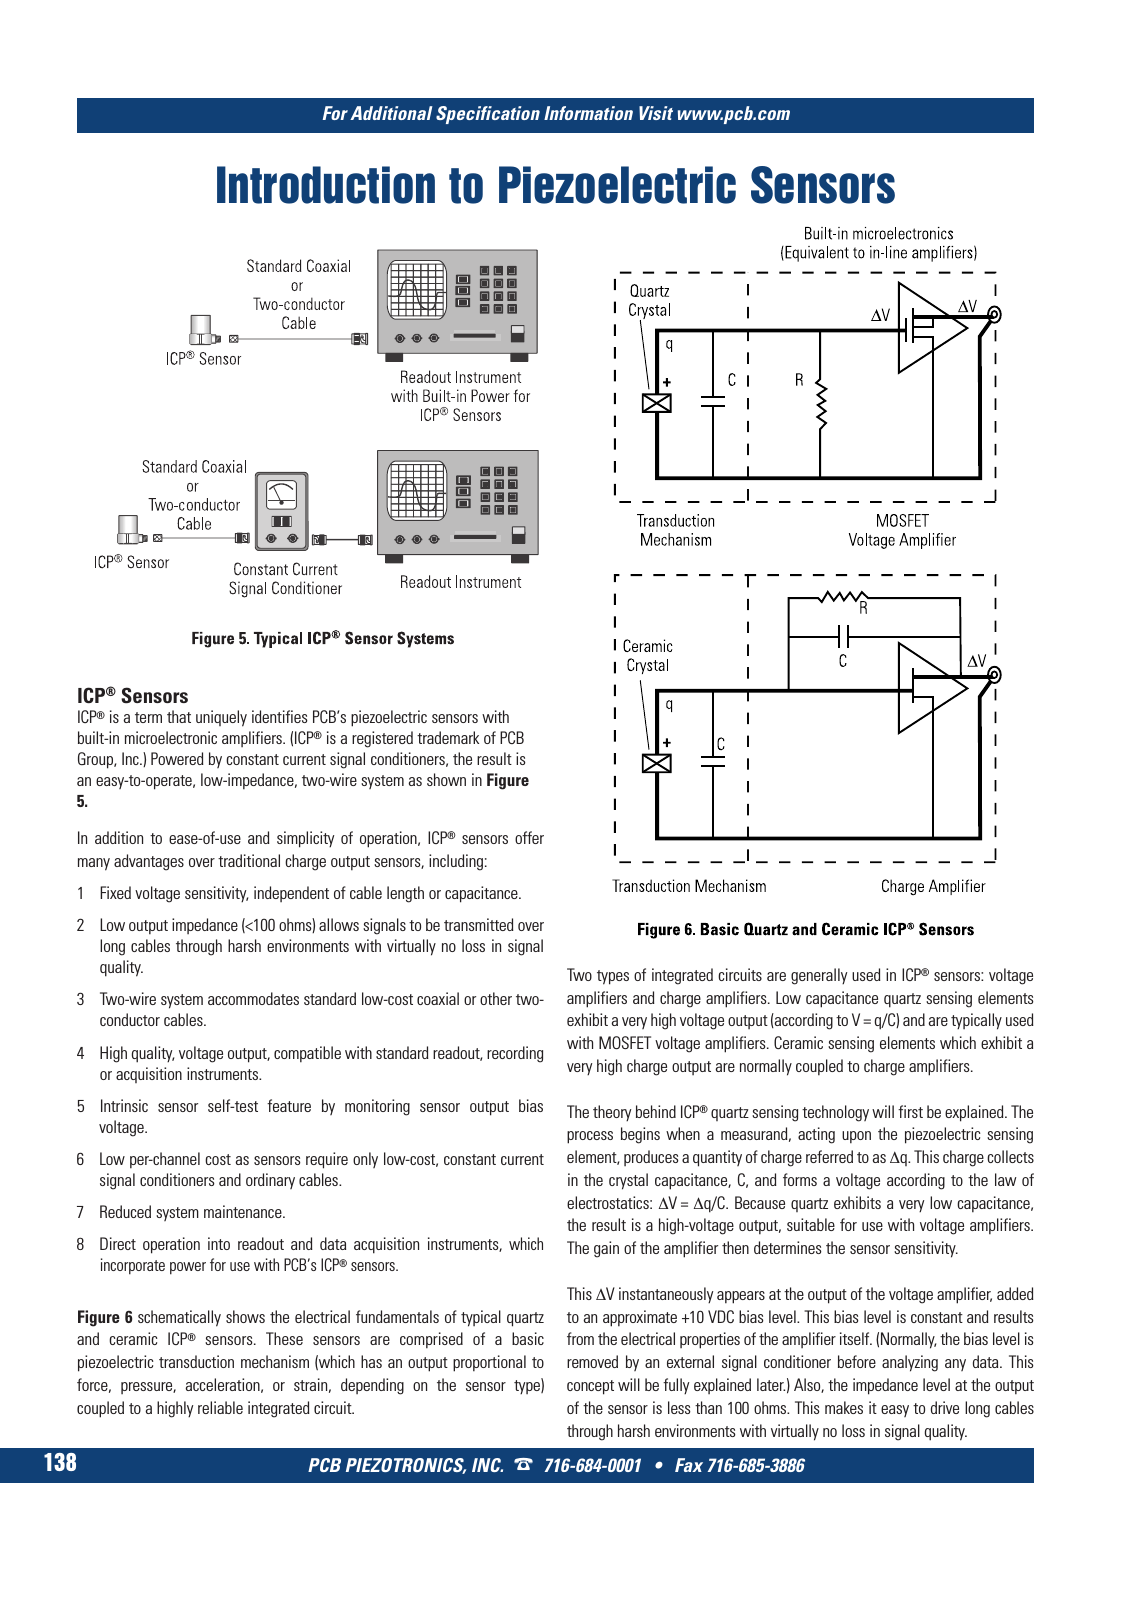 Vorschau PCB Test & Measurement Seite 140